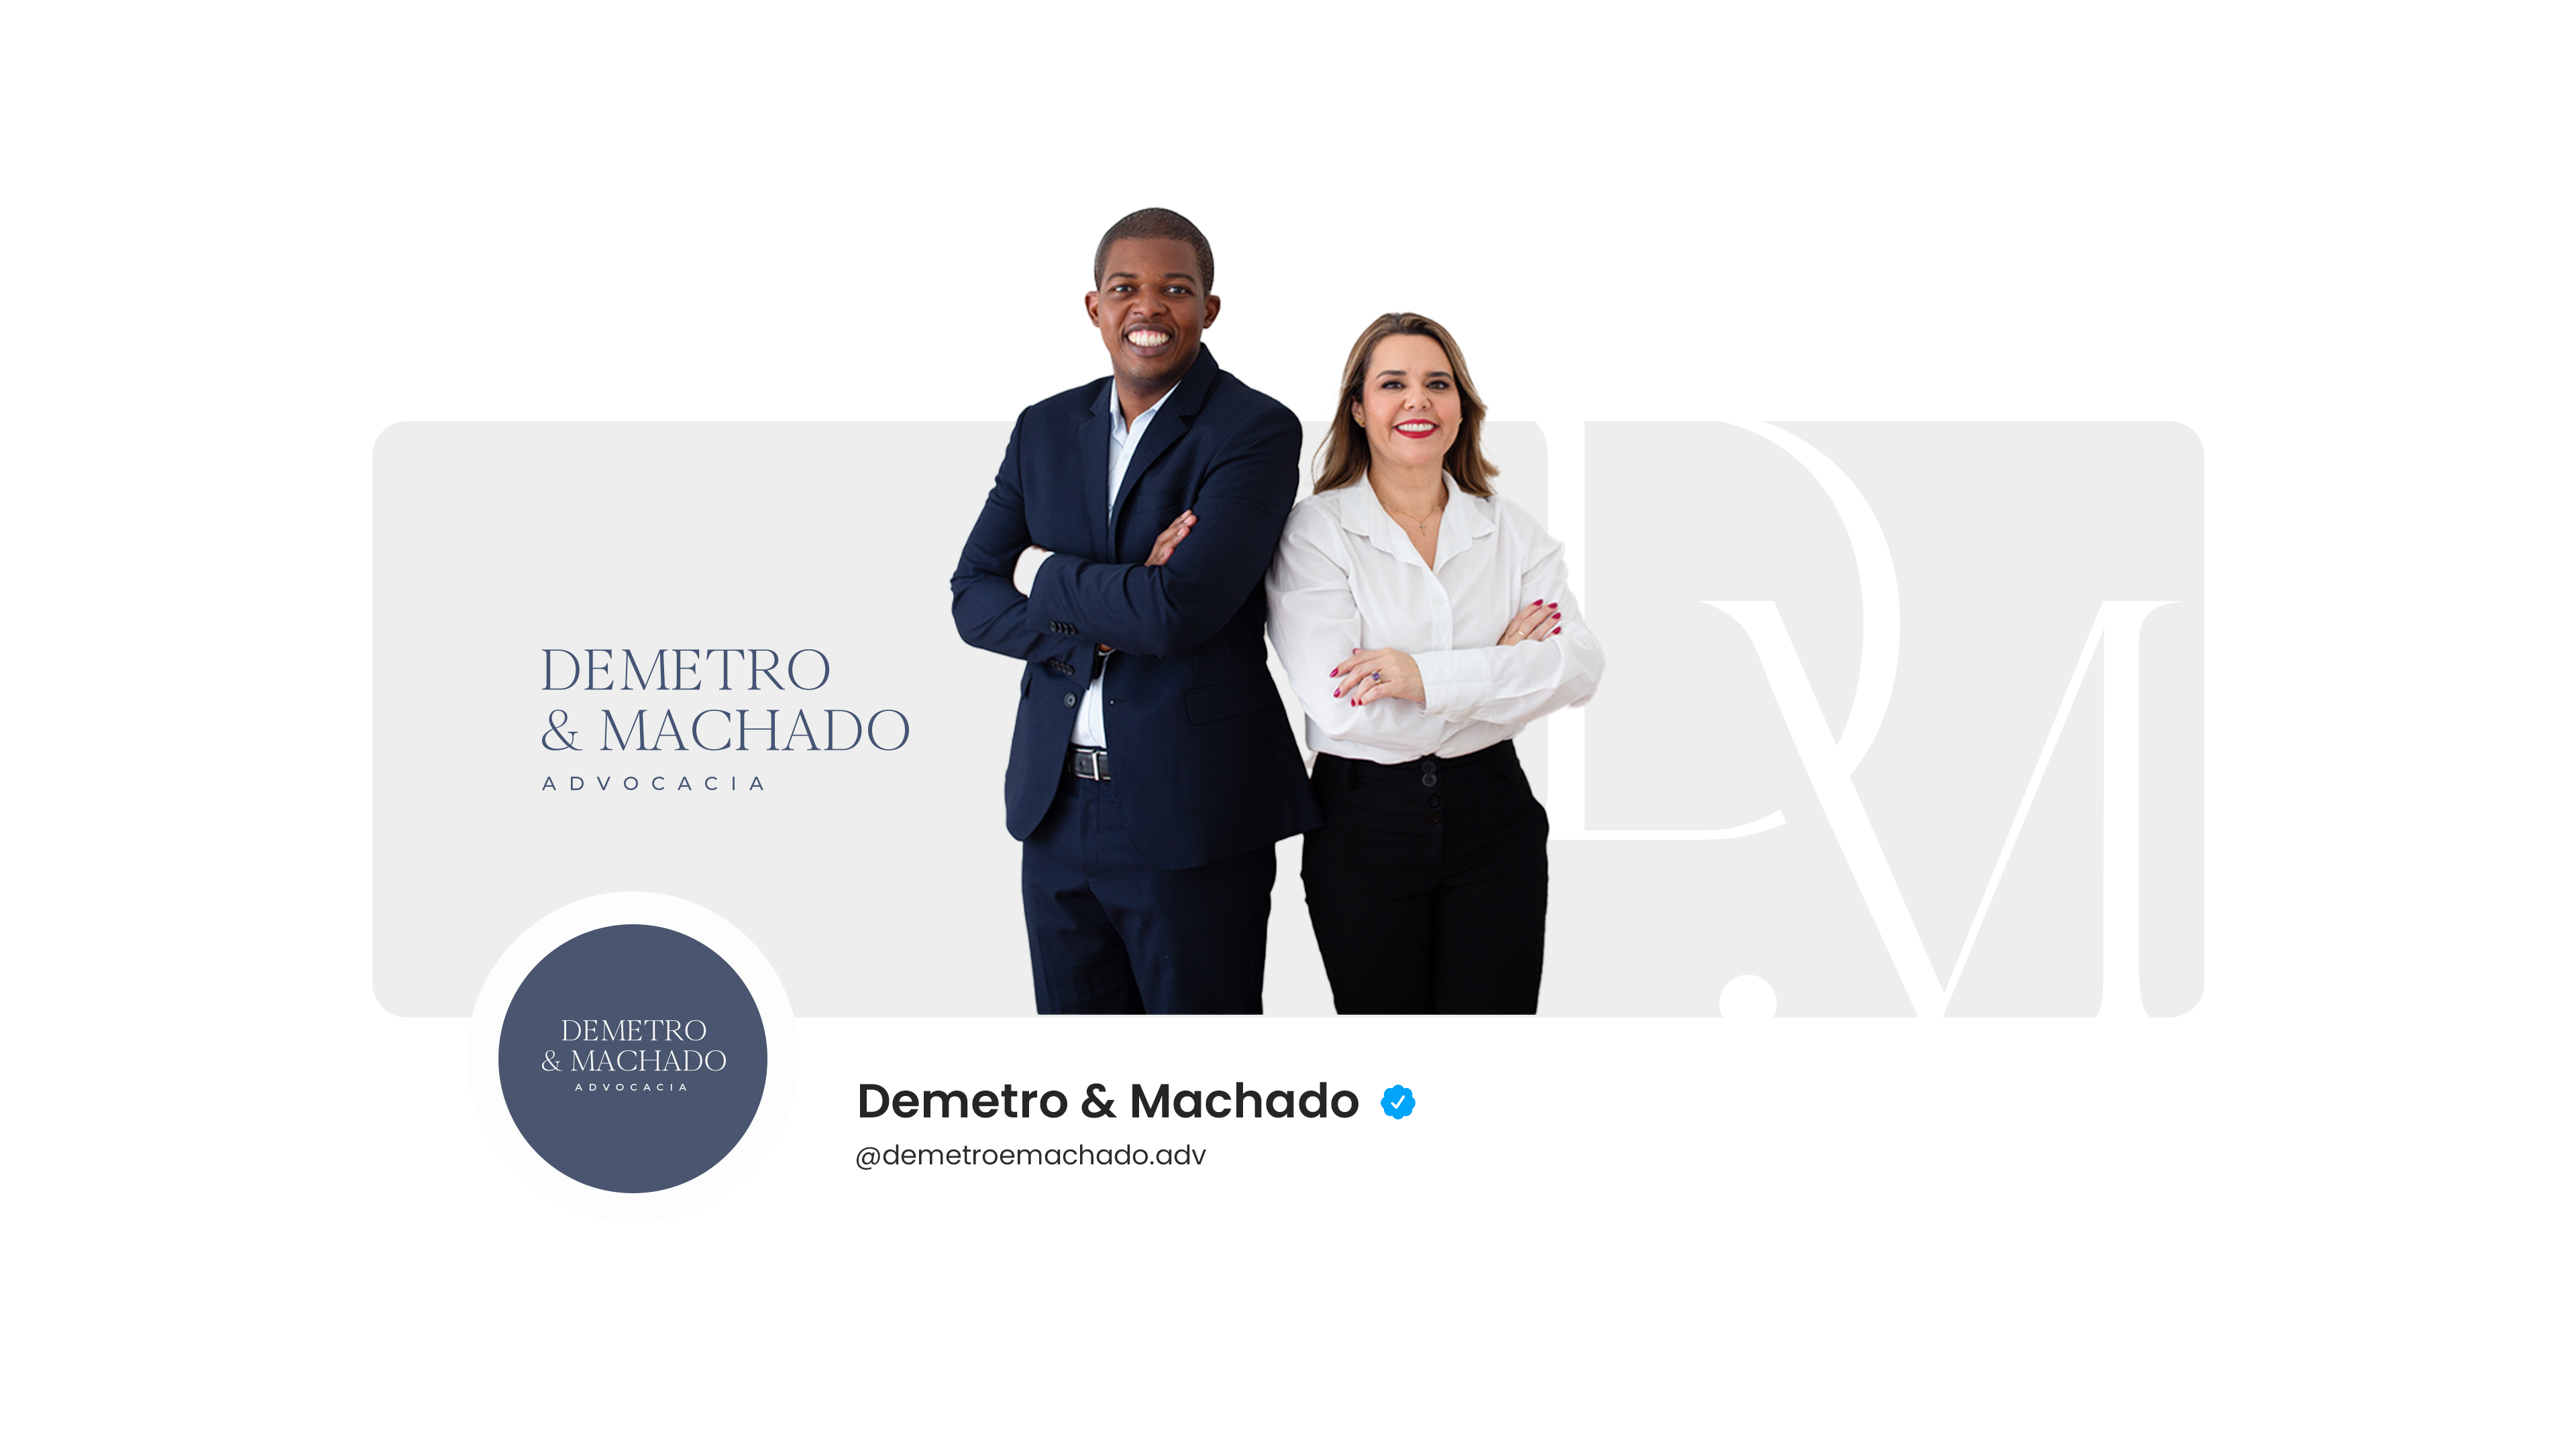 Demetro & Machado